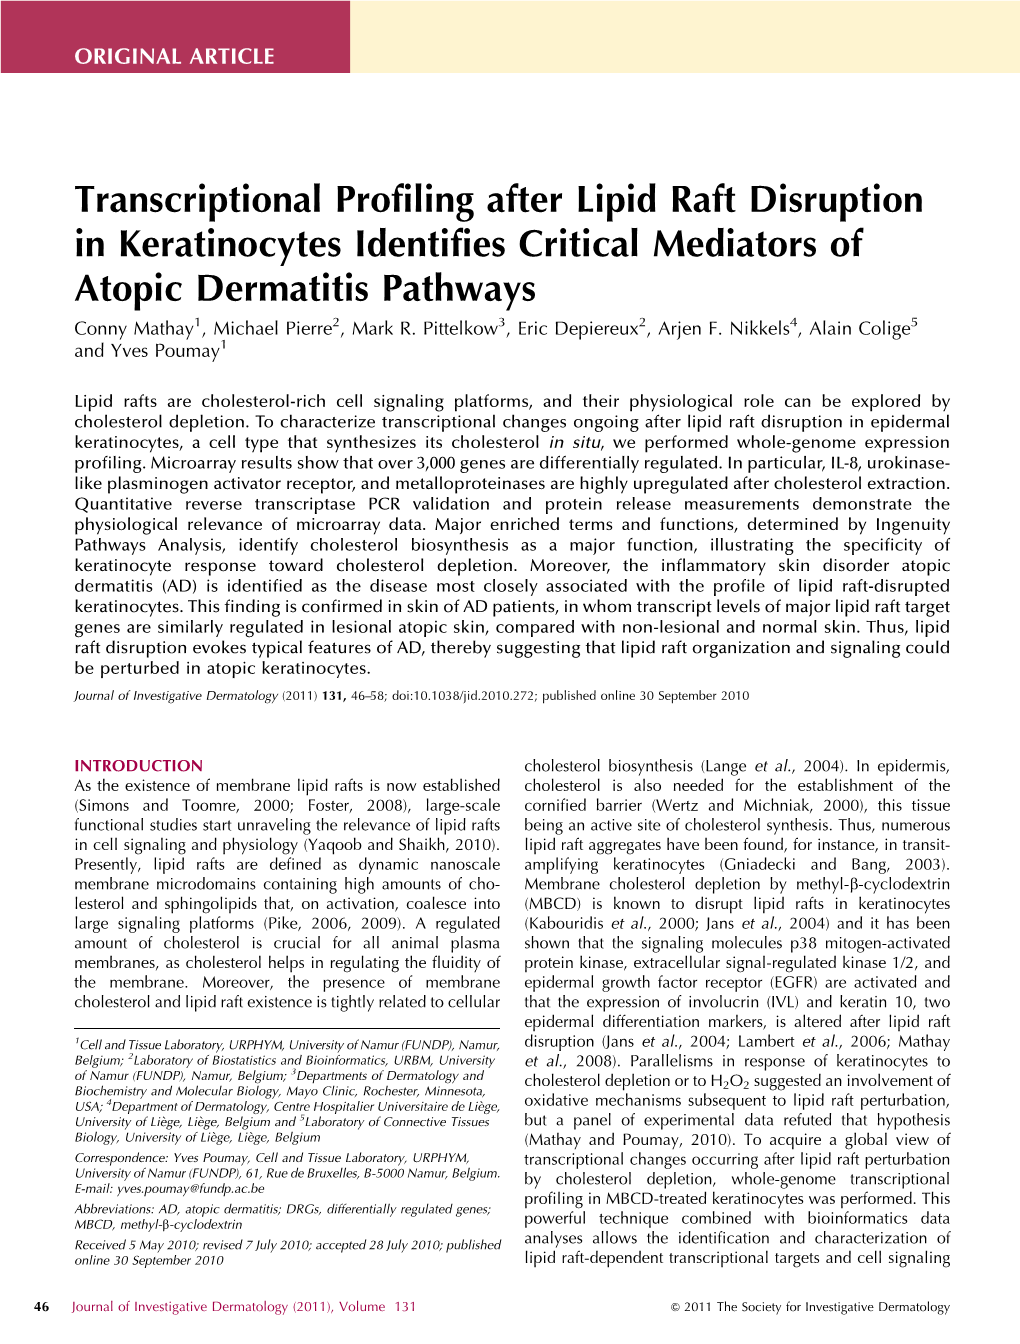 Transcriptional Profiling After Lipid Raft Disruption in Keratinocytes